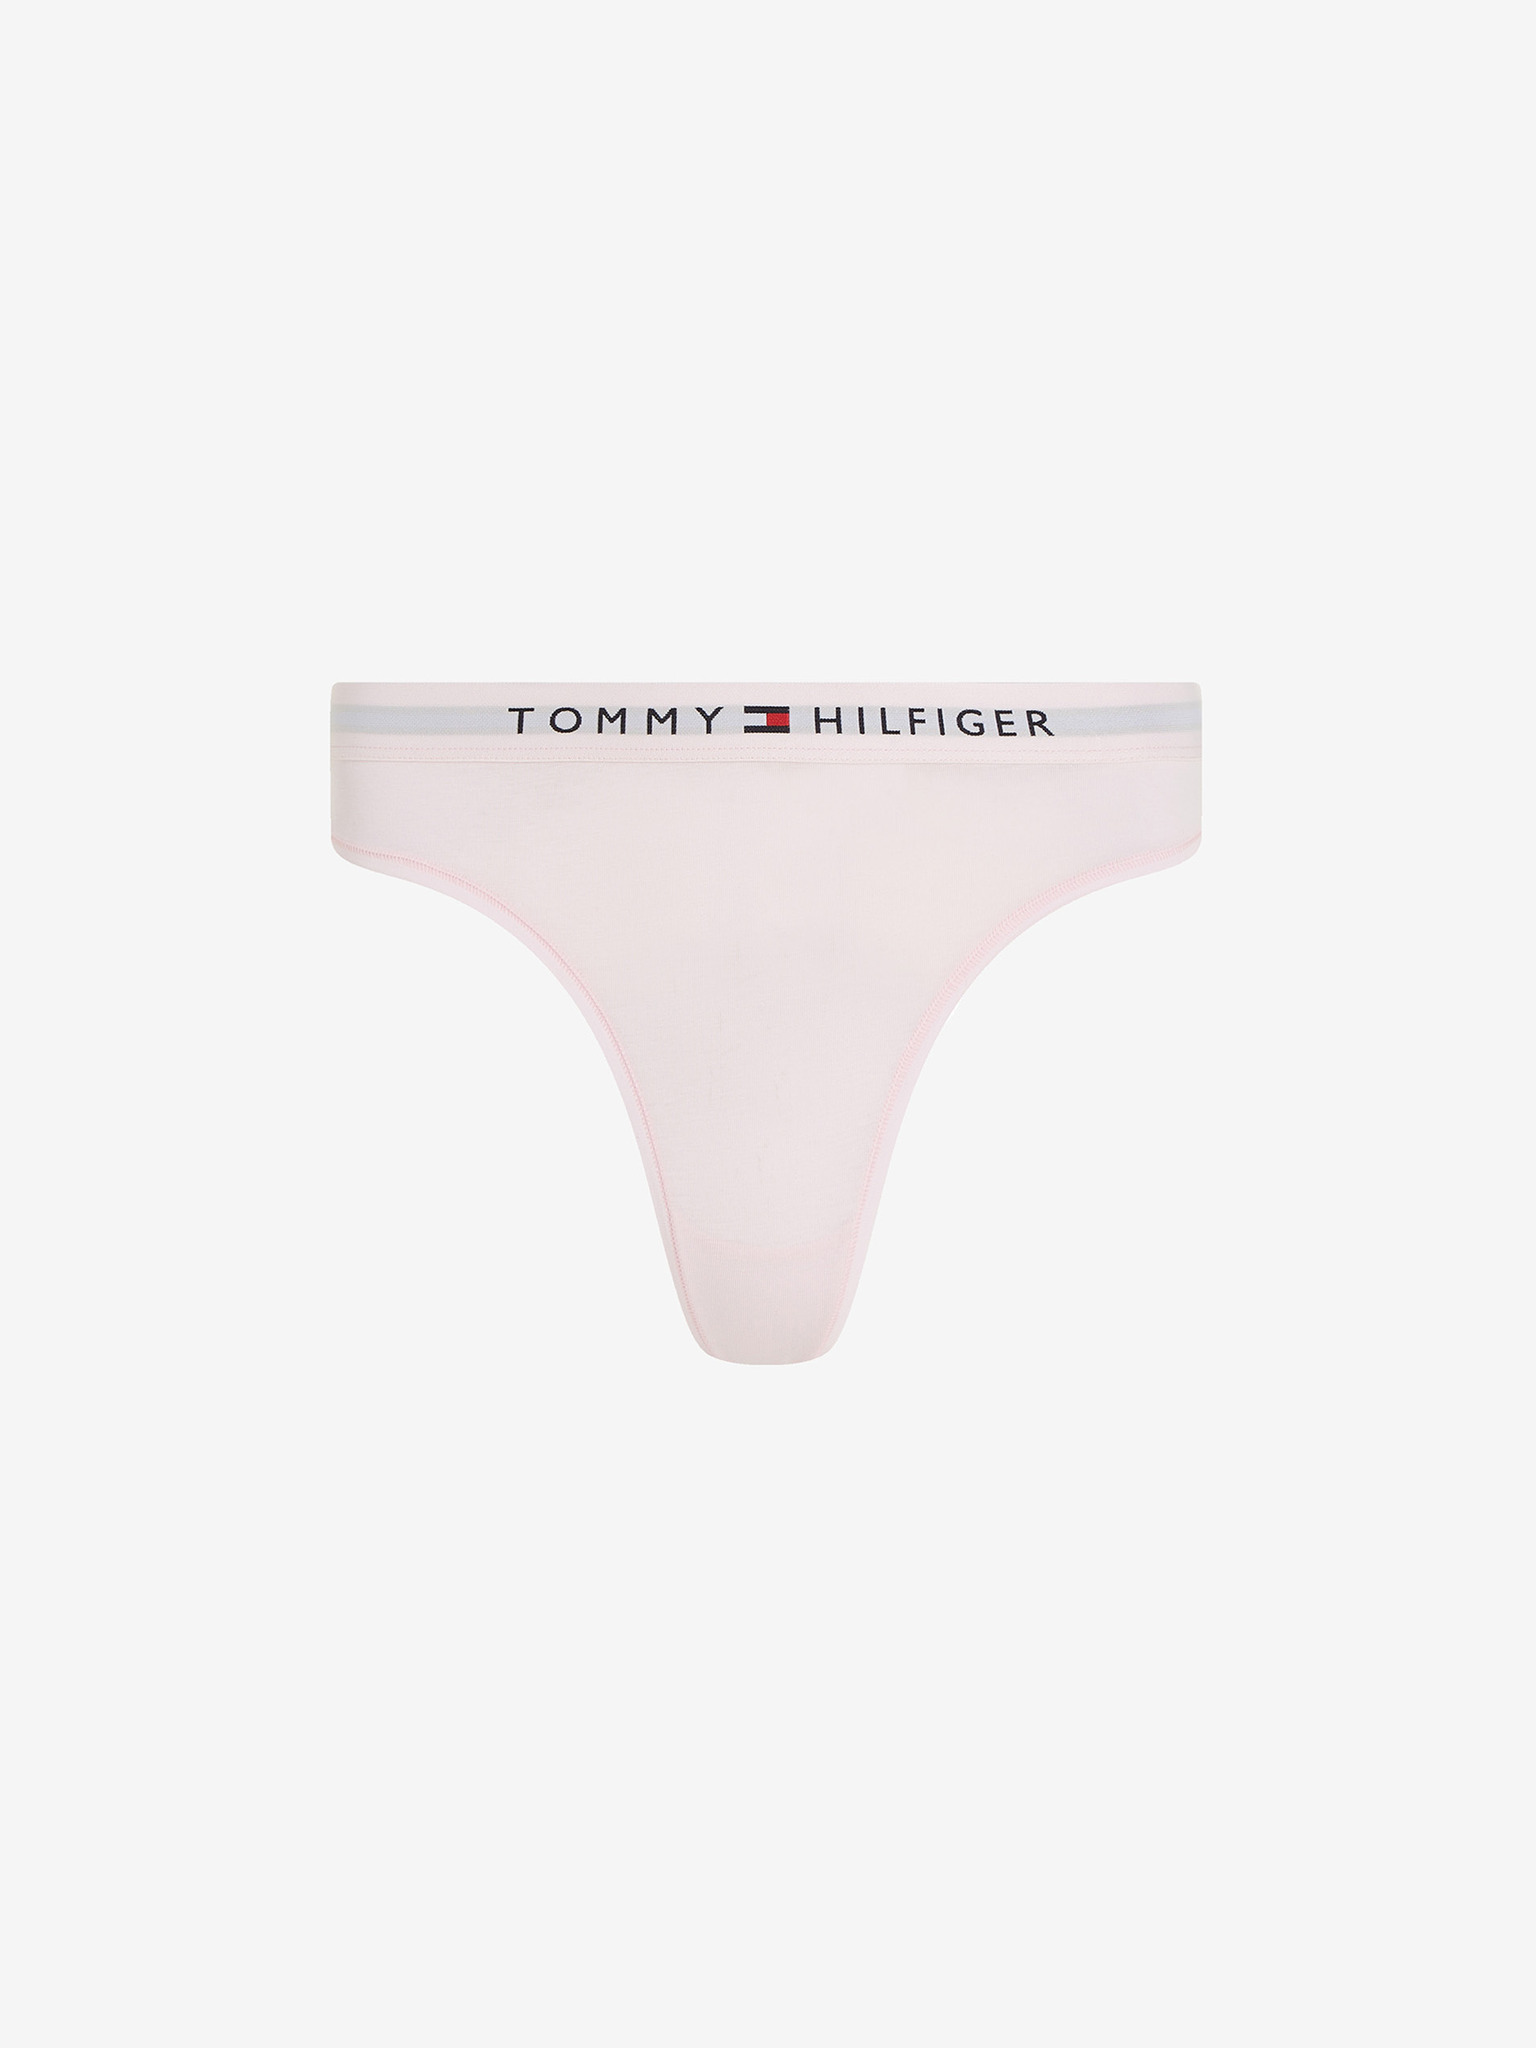 Panties Hilfiger Underwear Tommy -